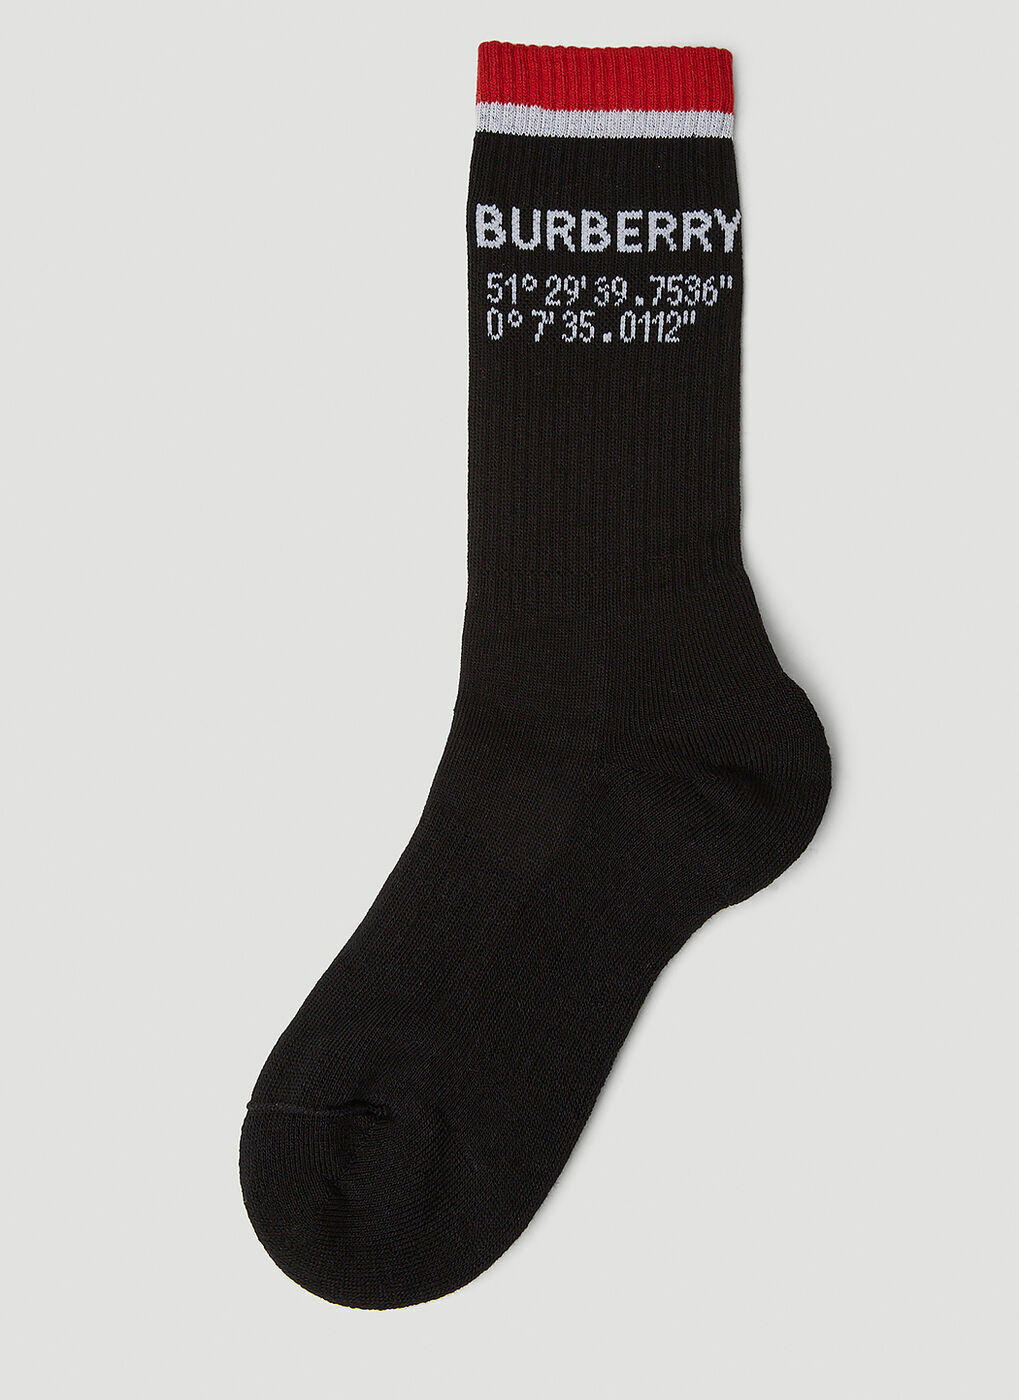 Burberry Socks Price Belgium, SAVE 56% 